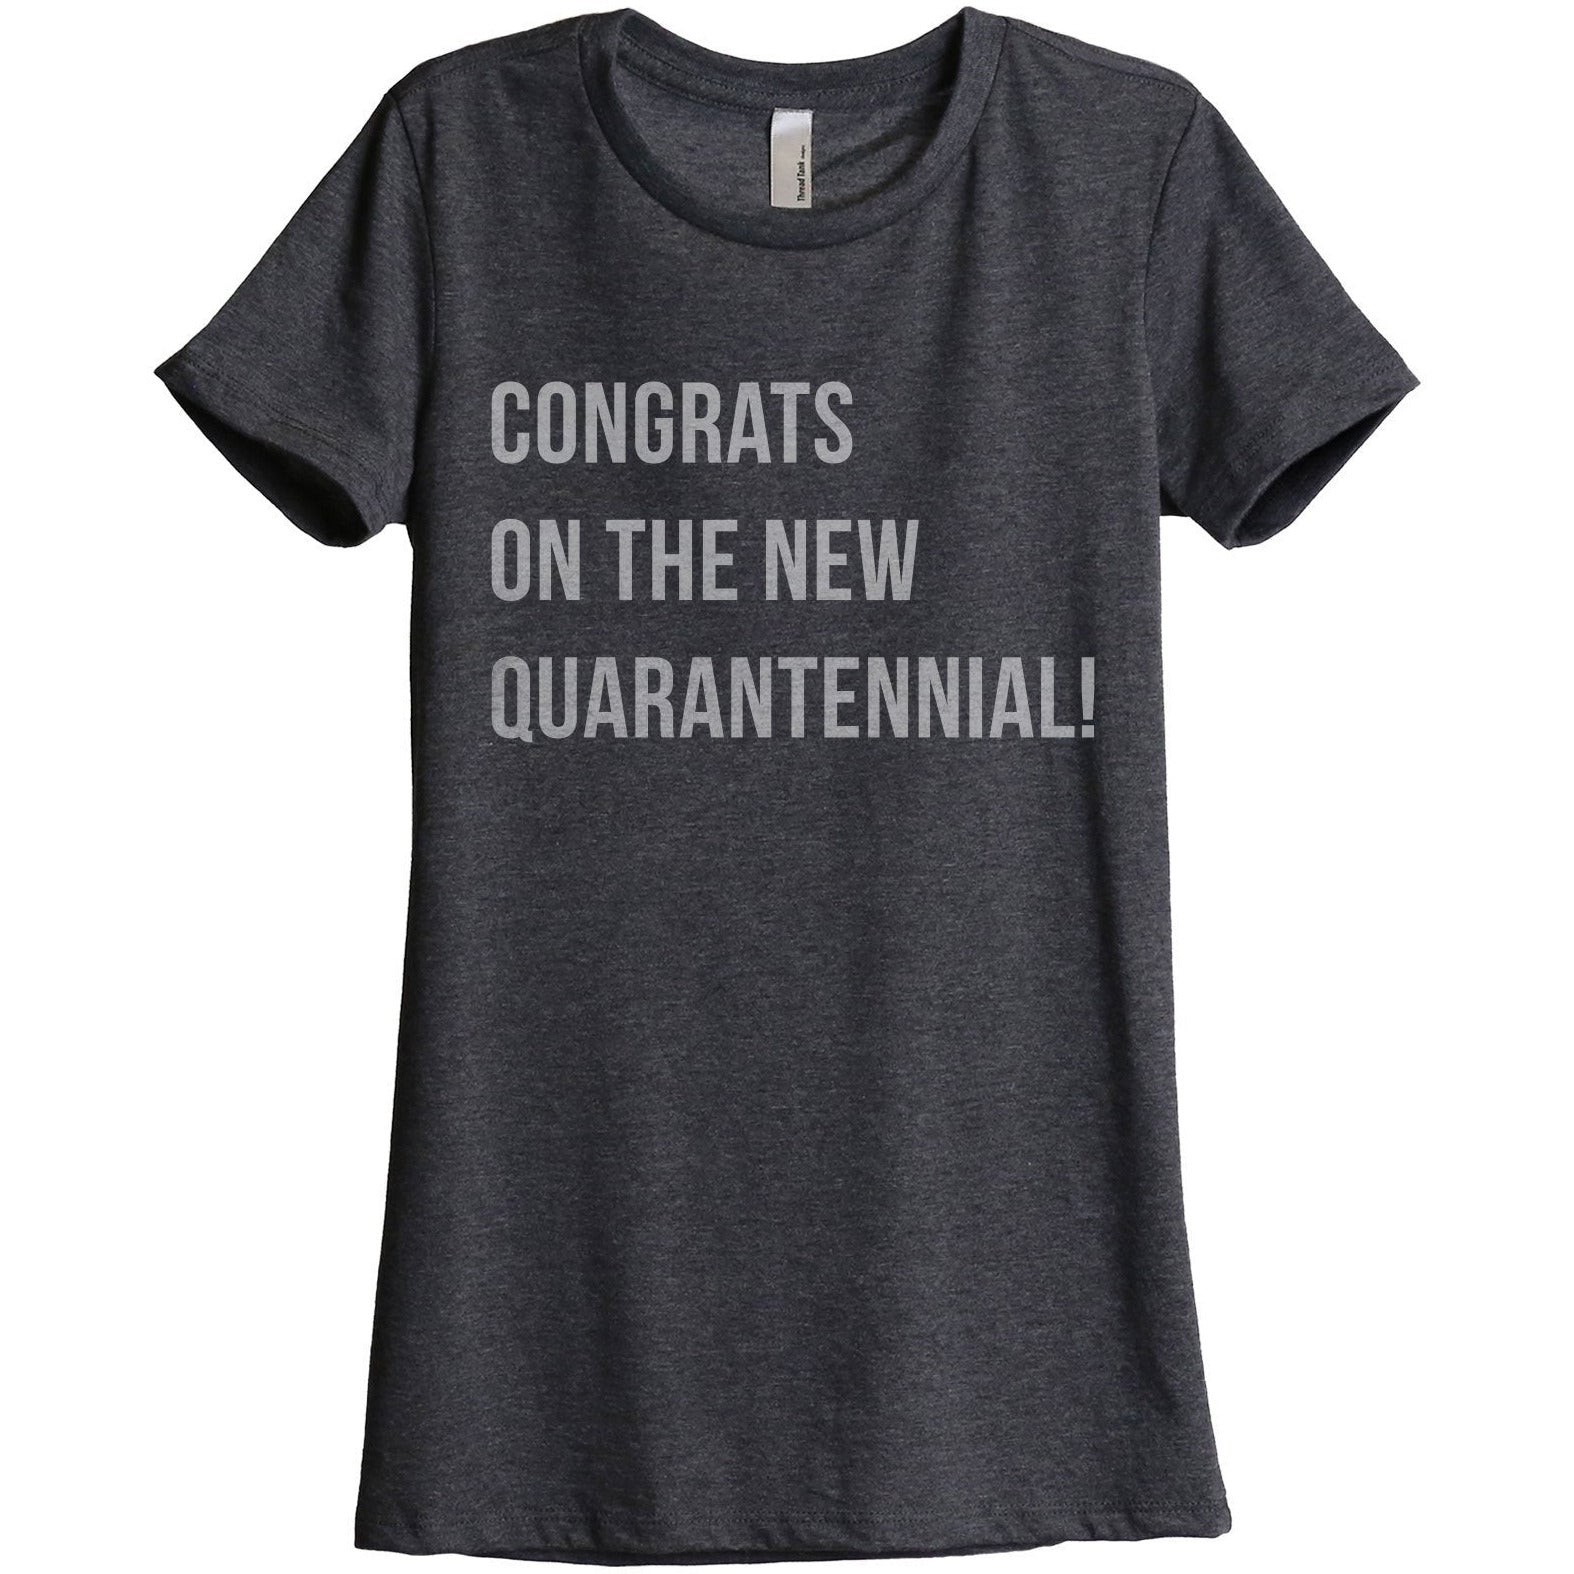 Congrats On The New Quarantennial Women's Relaxed Crewneck T-Shirt Top Tee Charcoal Grey
